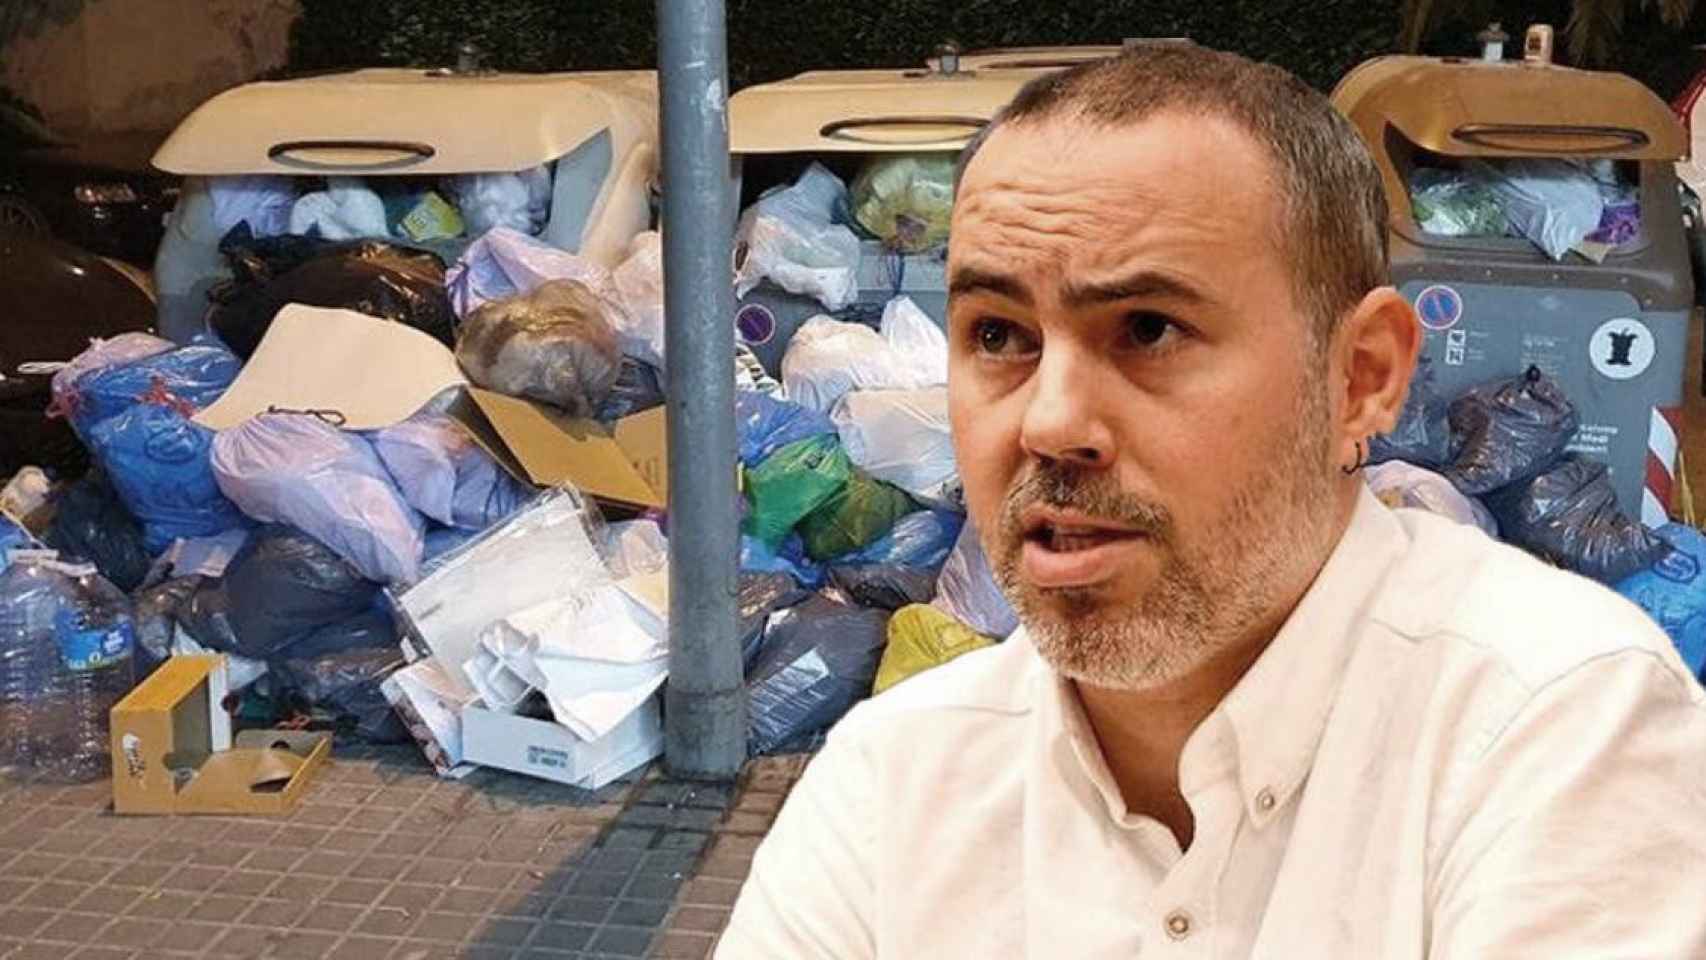 Eloi Badia, concejal de Emergencia Climática de Barcelona, con basuras frente a un contenedor / FOTOMONTAJE CG